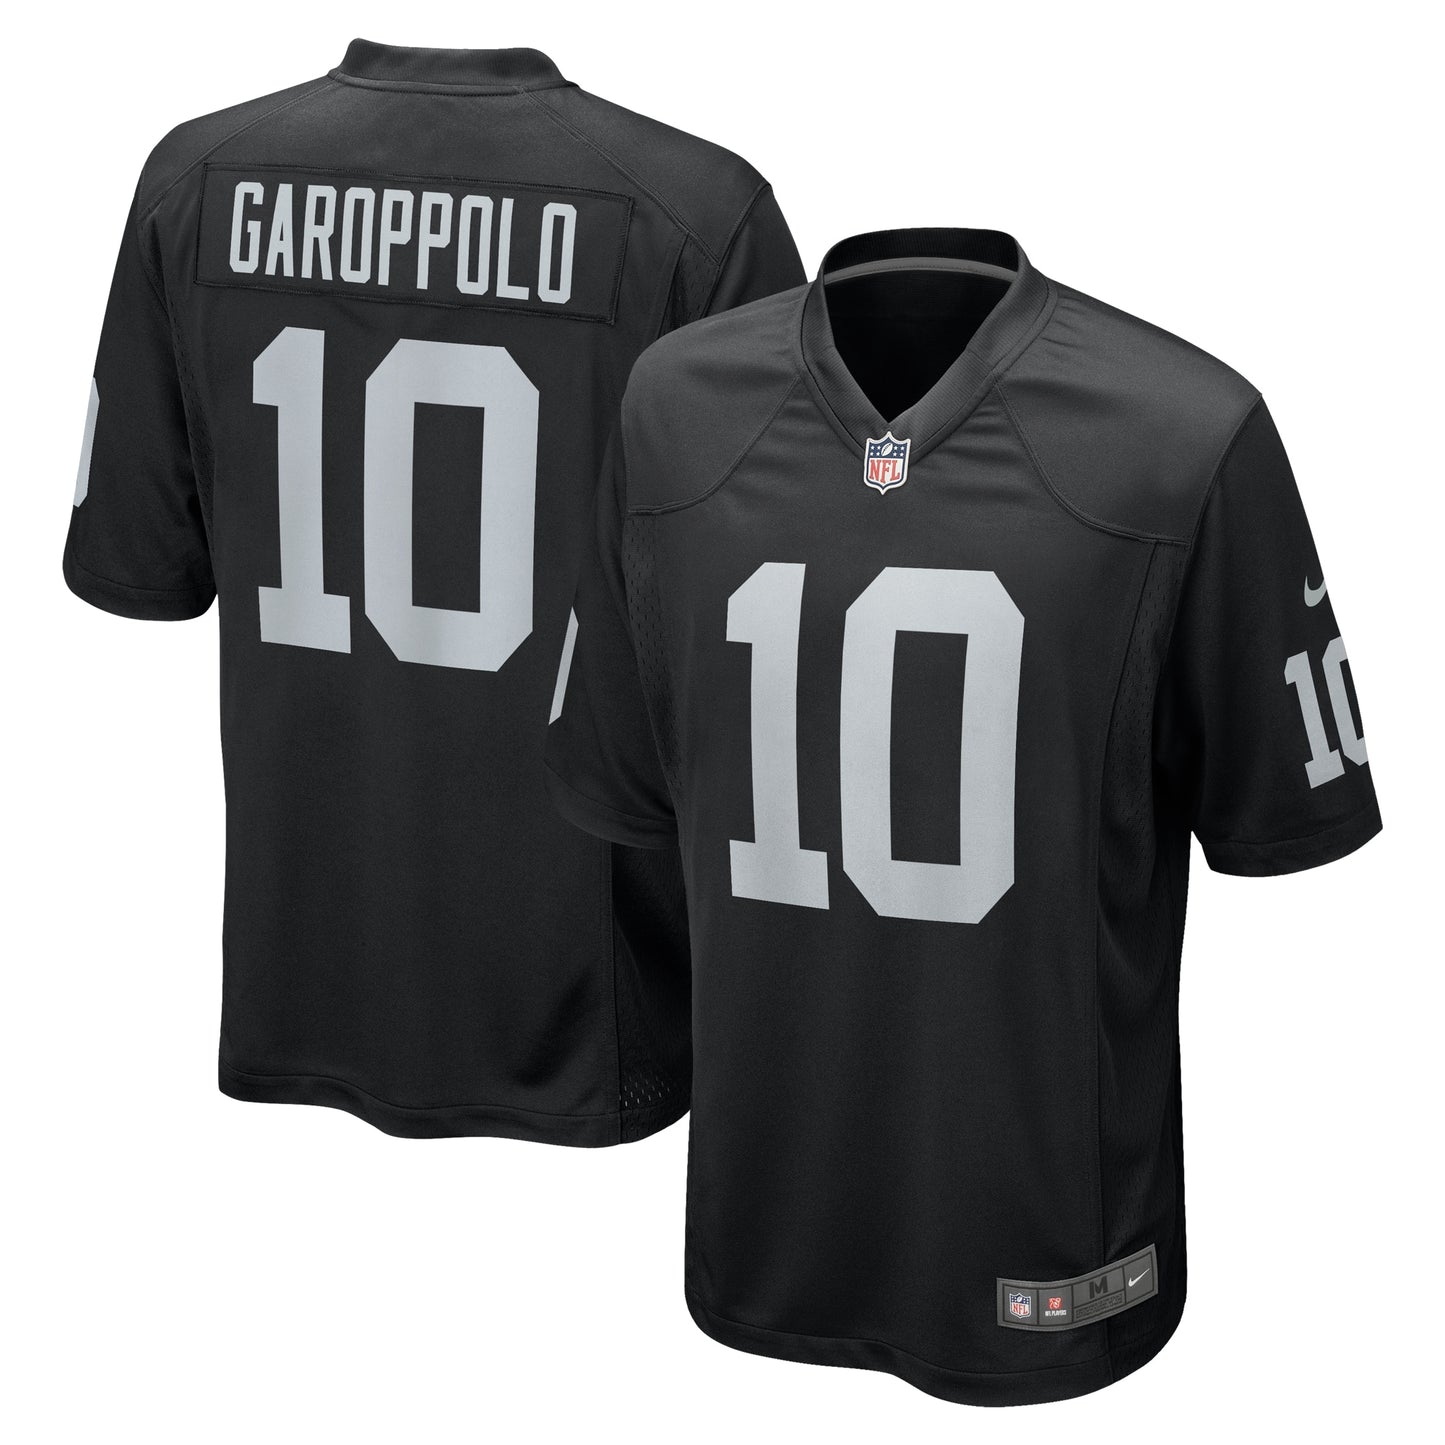 Jimmy Garoppolo Las Vegas Raiders Nike Game Player Jersey - Black